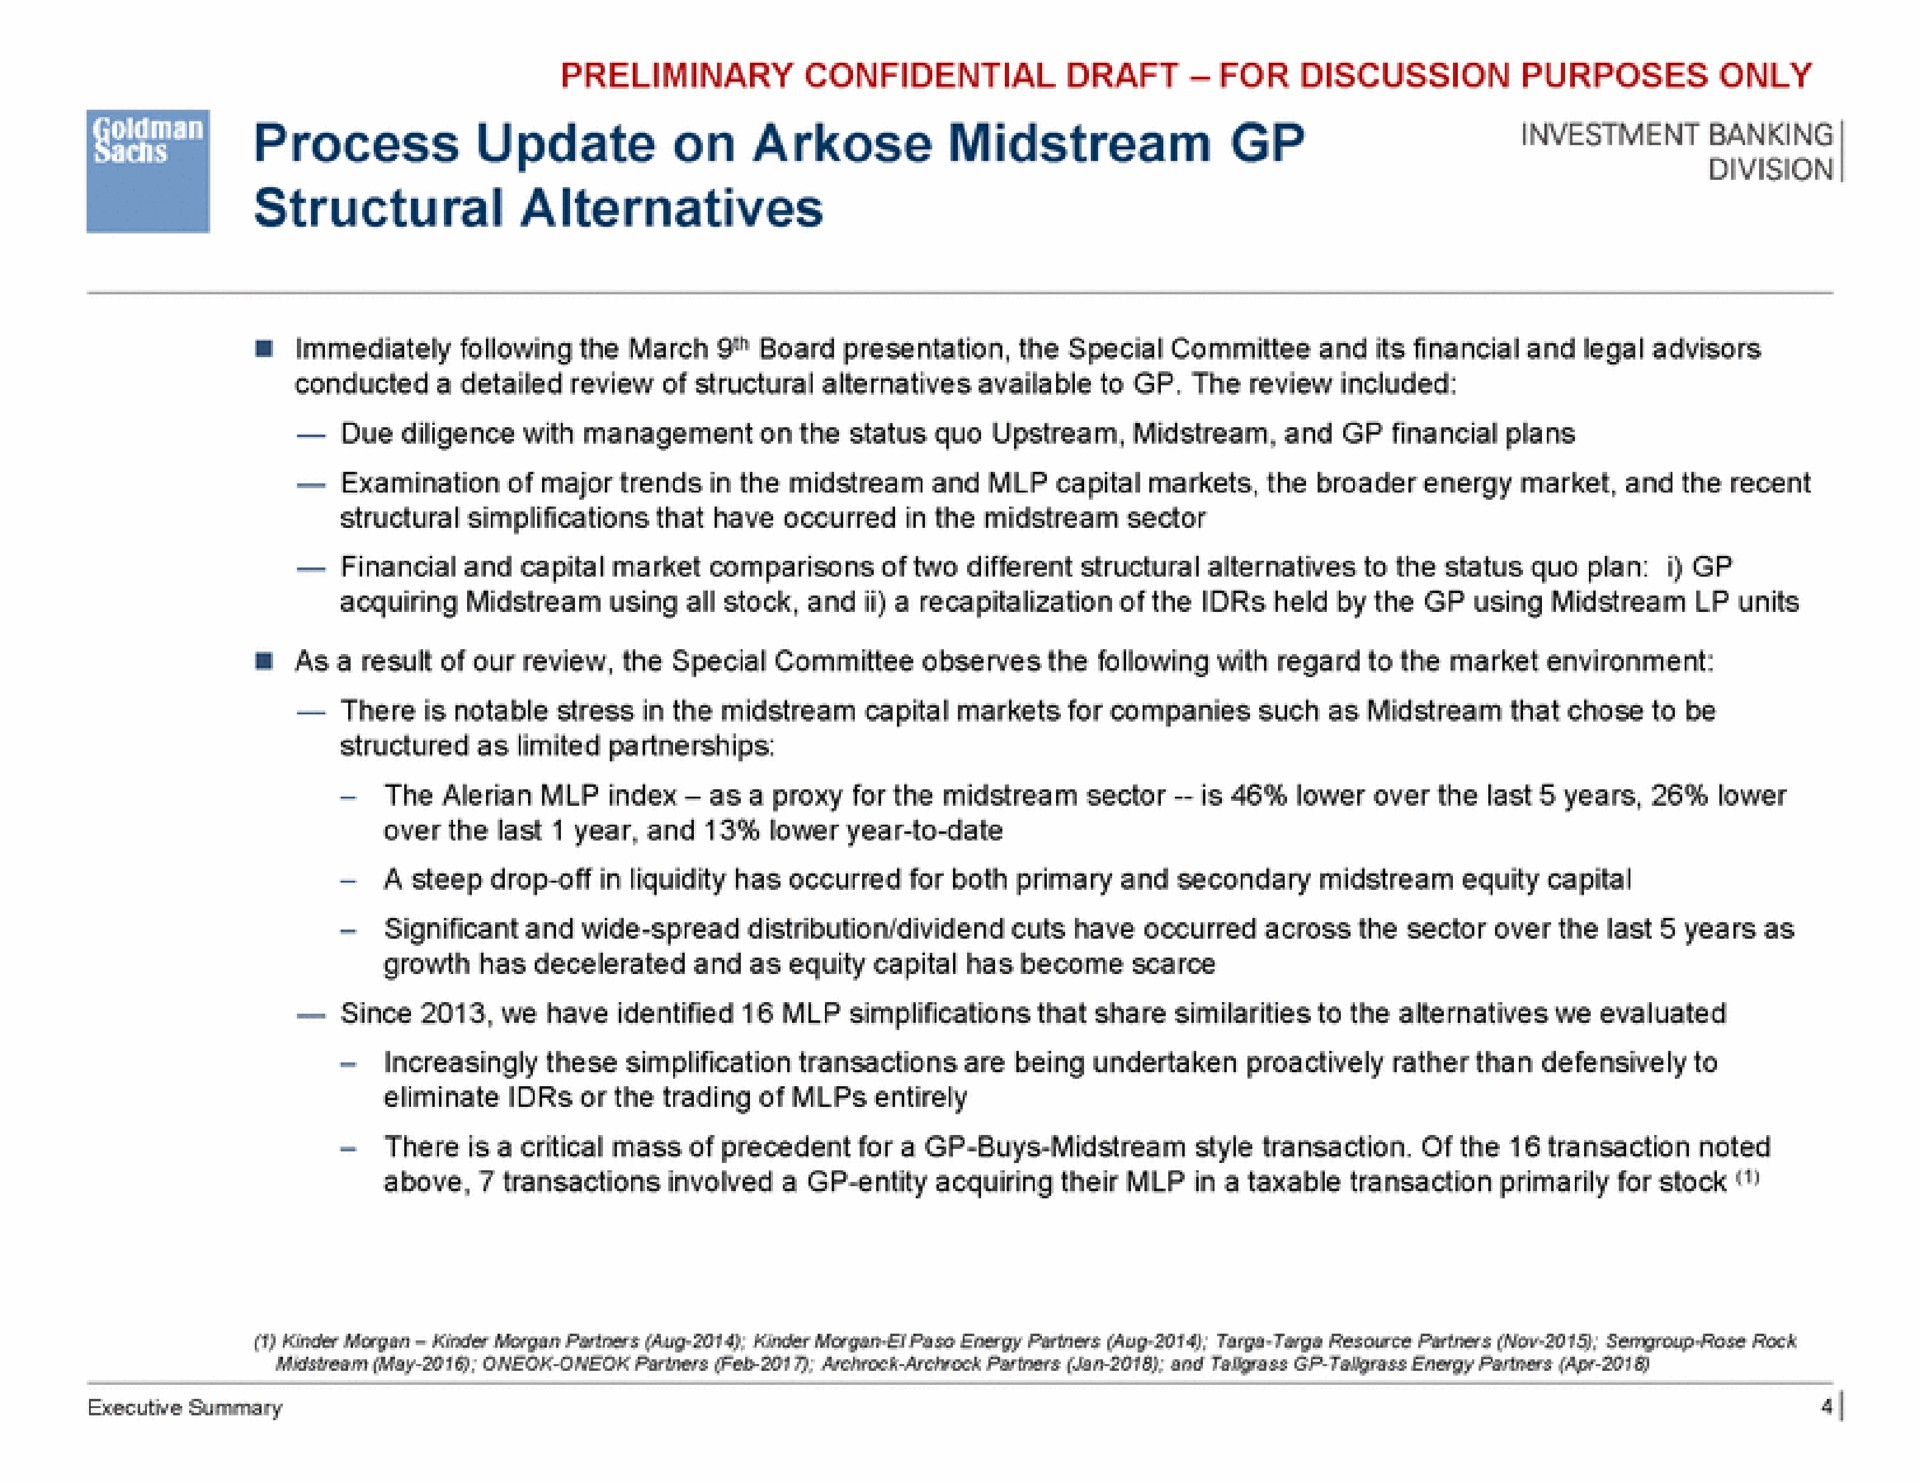 process update on arkose midstream cotte structural alternatives | Goldman Sachs